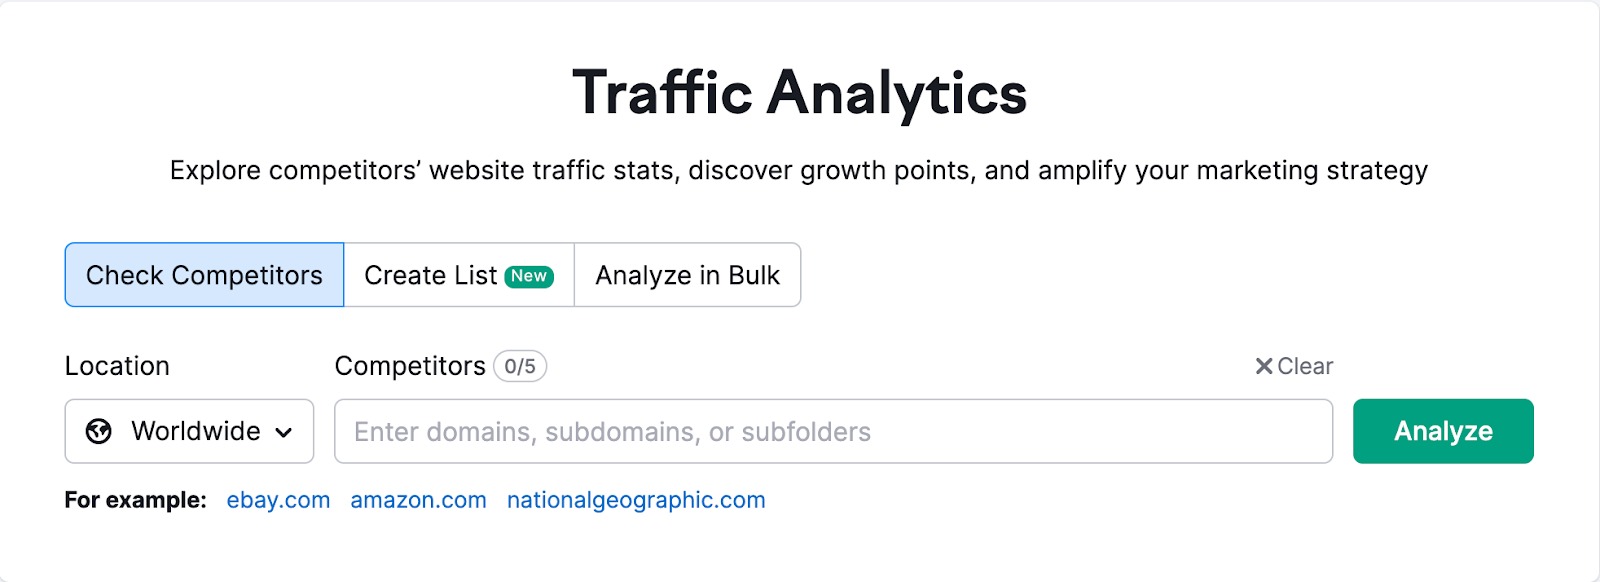 Traffic Analytics starting page